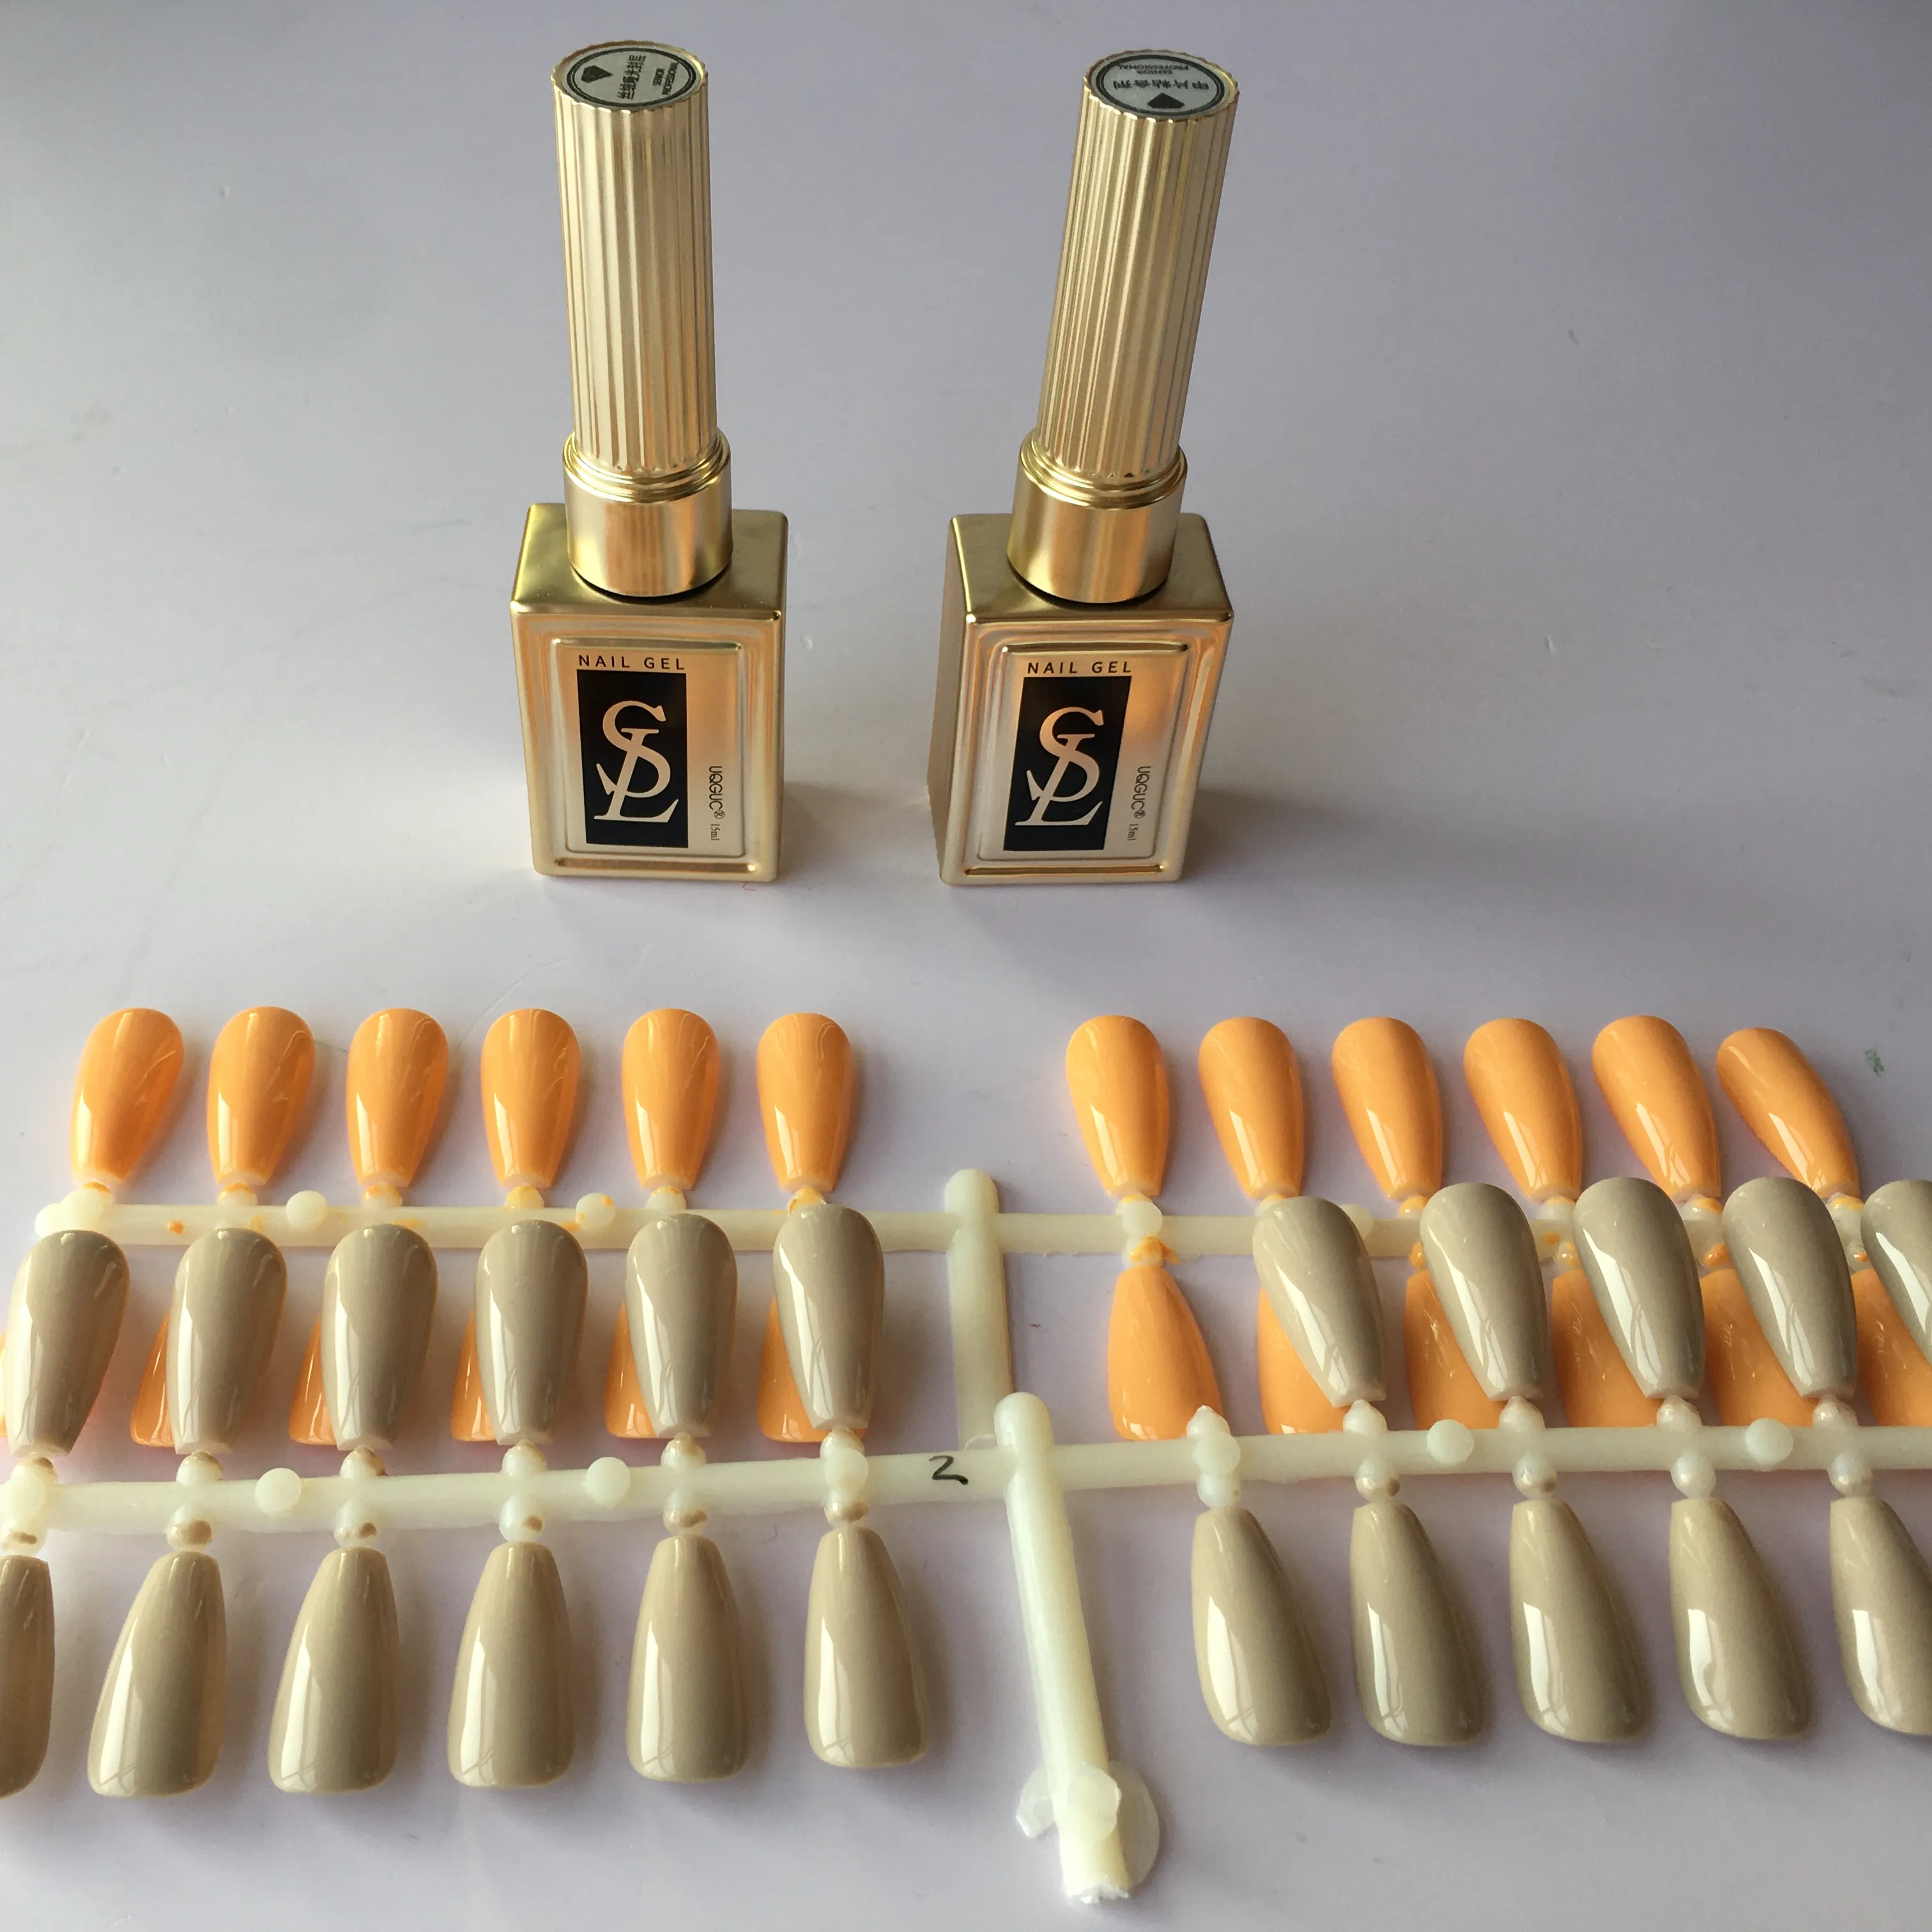 Free Shipping gel polish set nail products salon cosmetics uv gel nail polish manufacturer